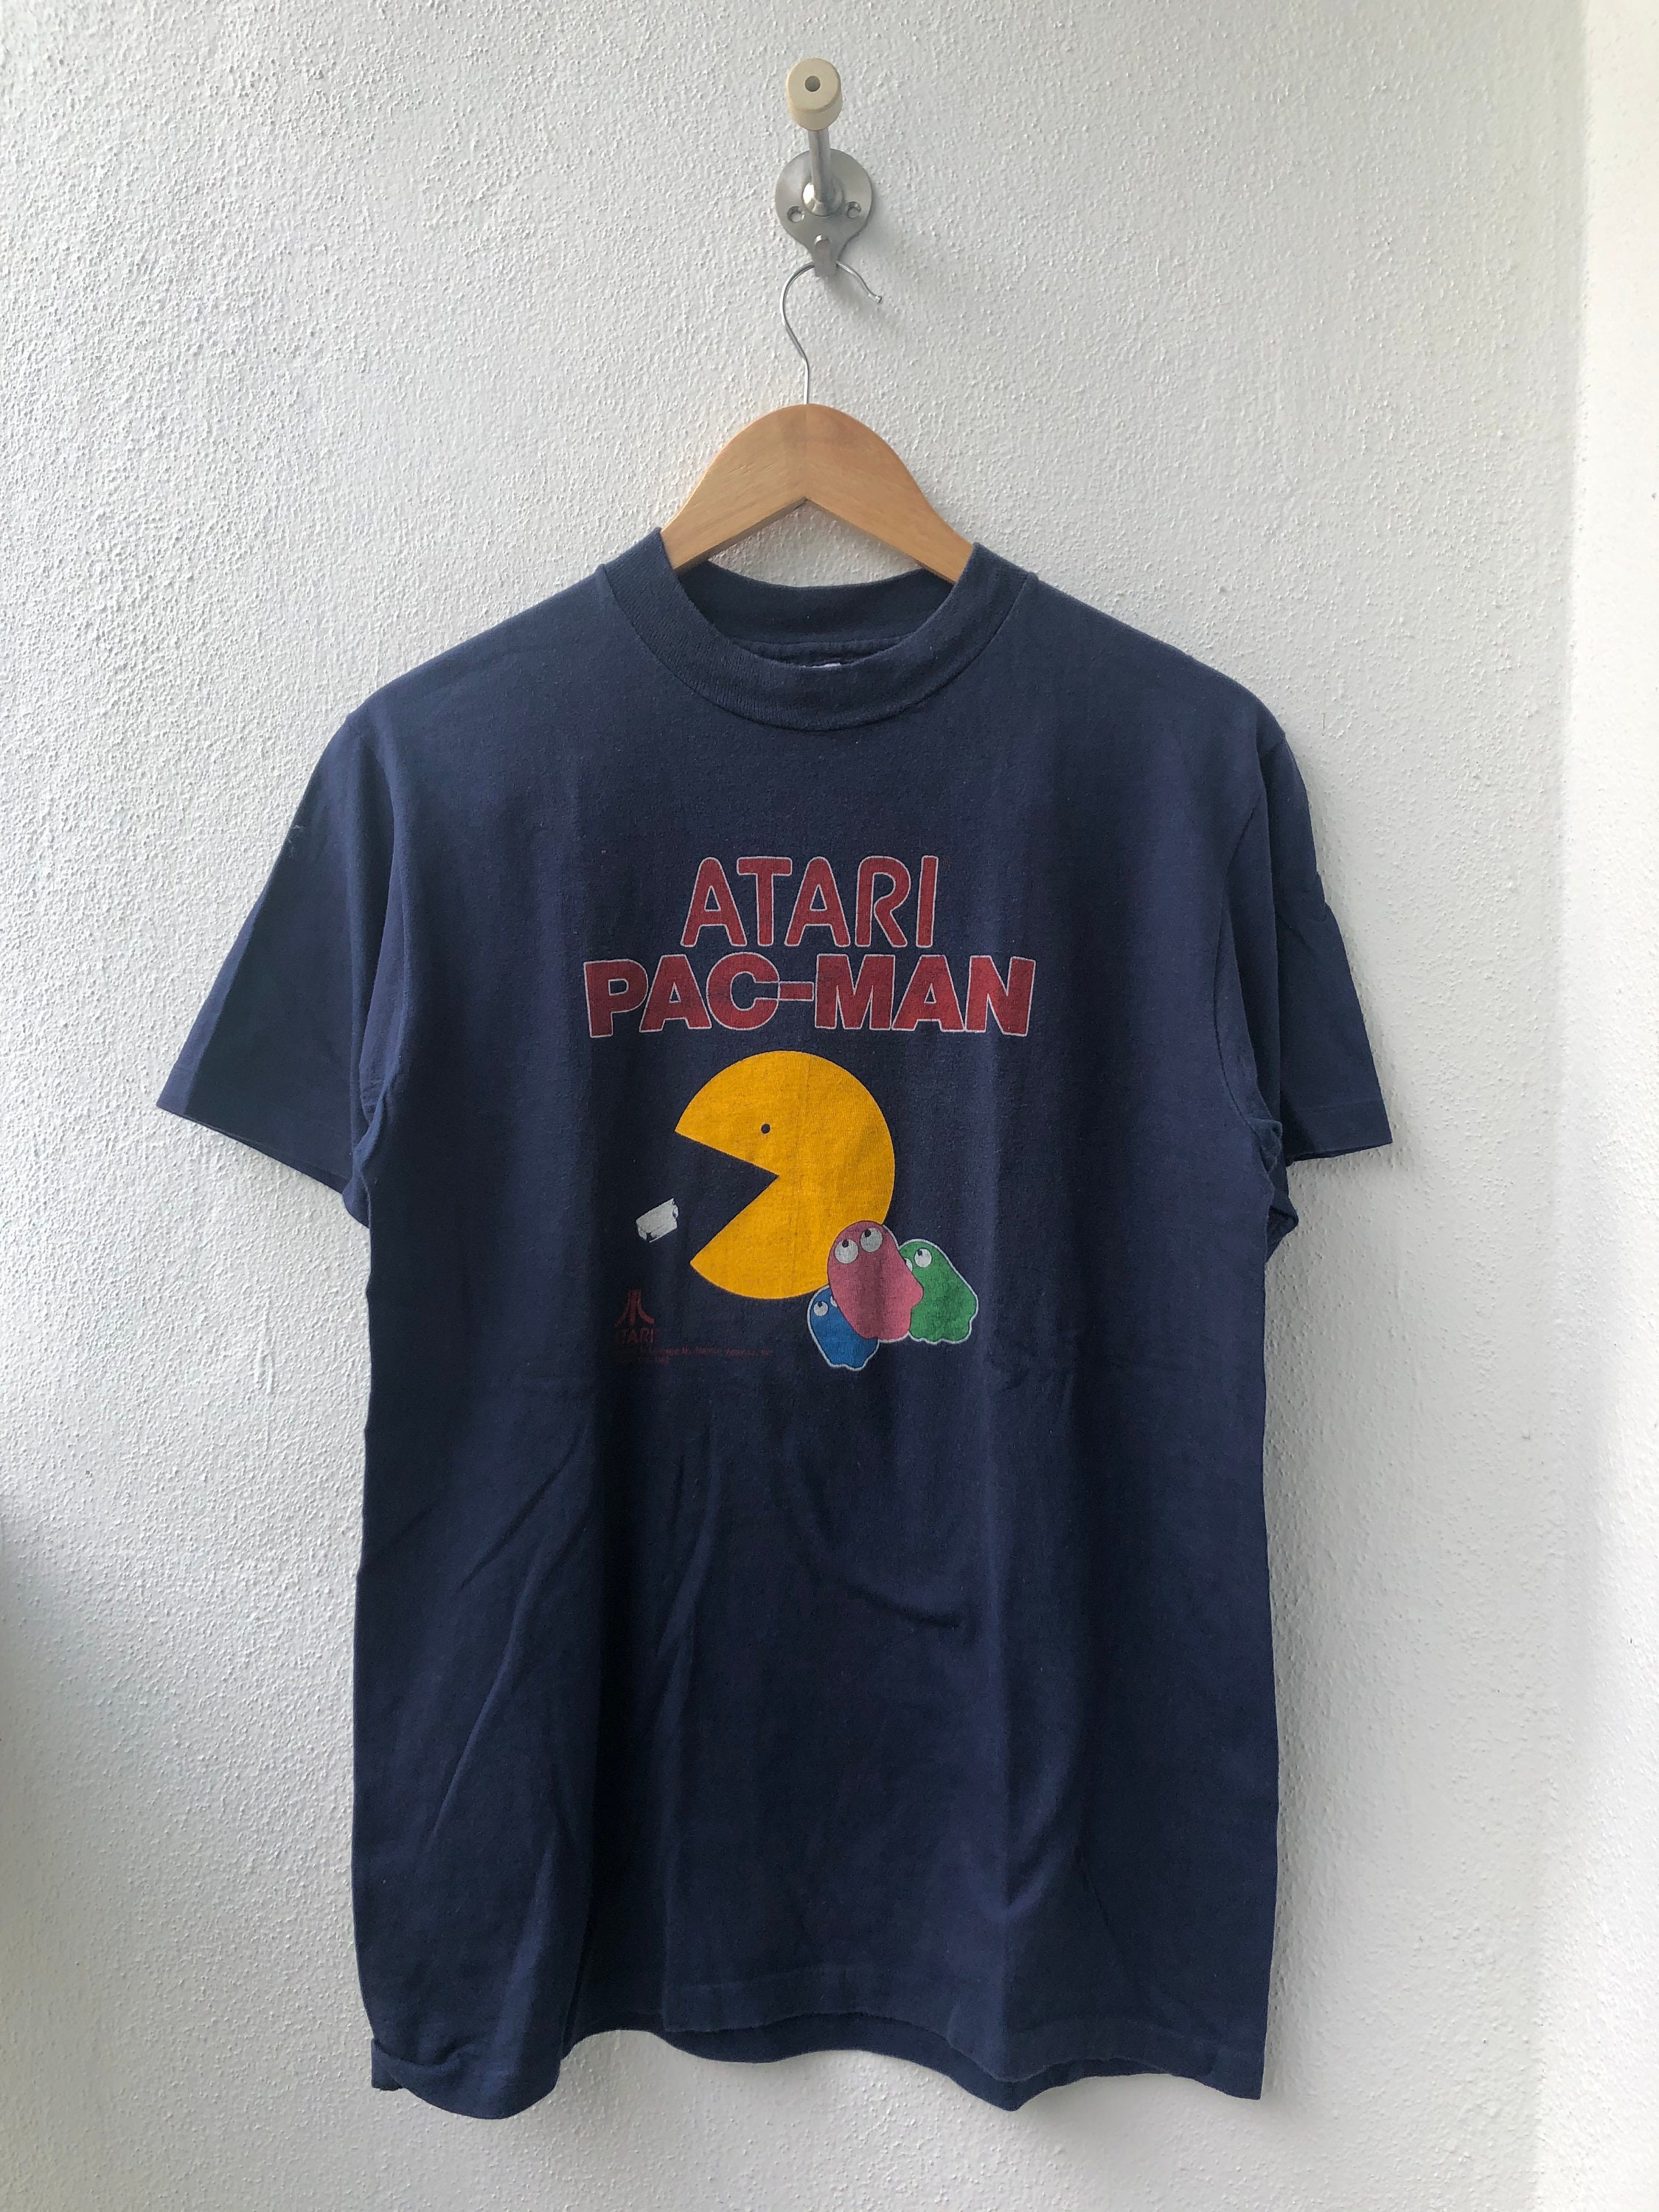 Kleding Herenkleding Overhemden & T-shirts T-shirts Atari Pac-Man T Shirt Vintage jaren 80 1982 Video Arcade Game Made In USA Mens Maat Medium 